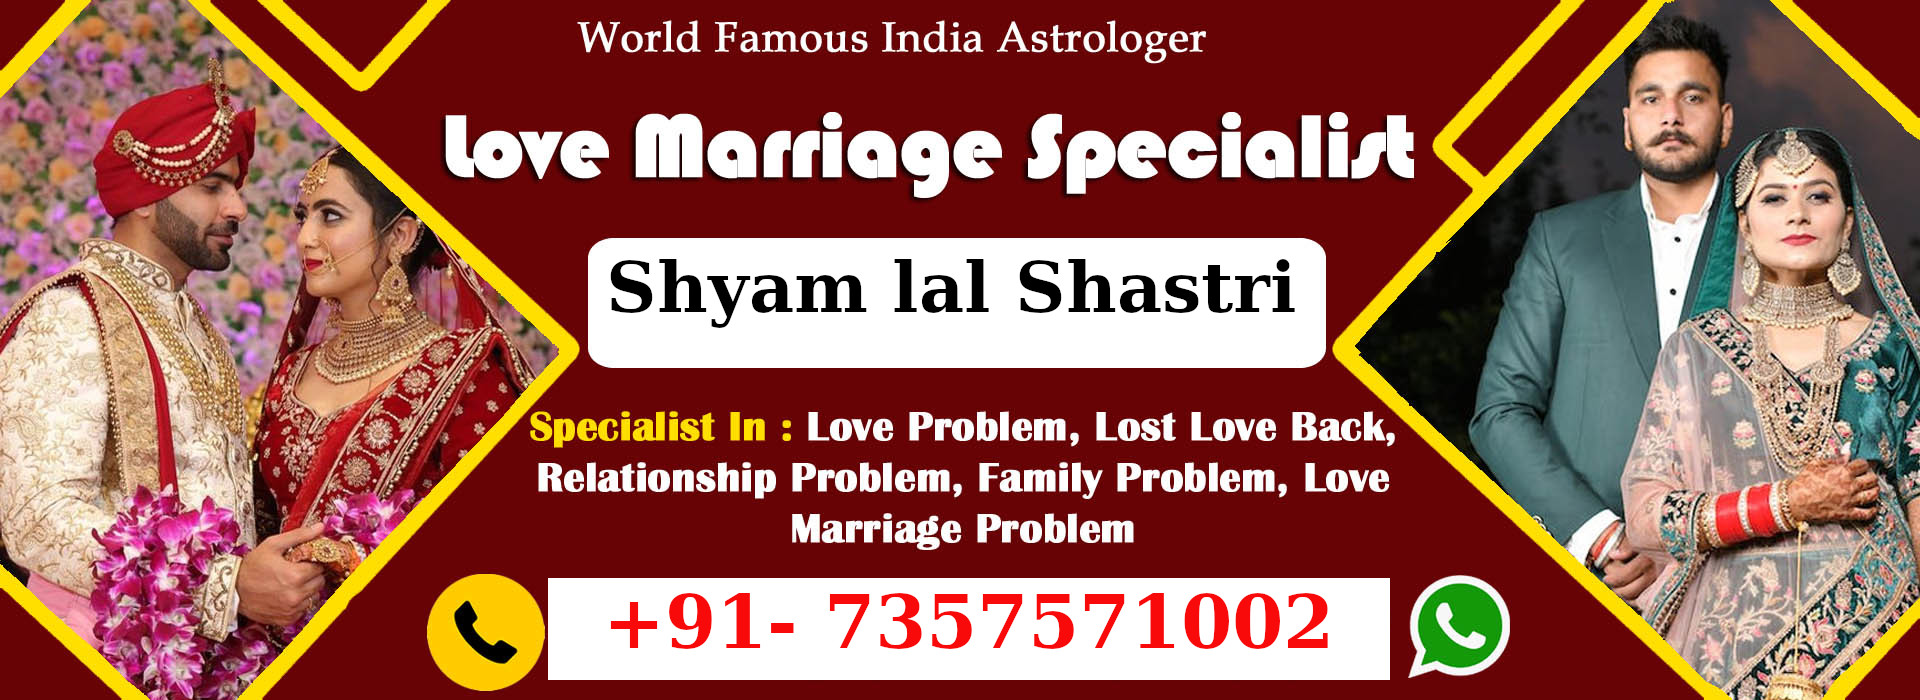 World Famous Astrologer P. Shyam Lal ShastriJi +91-7357571002